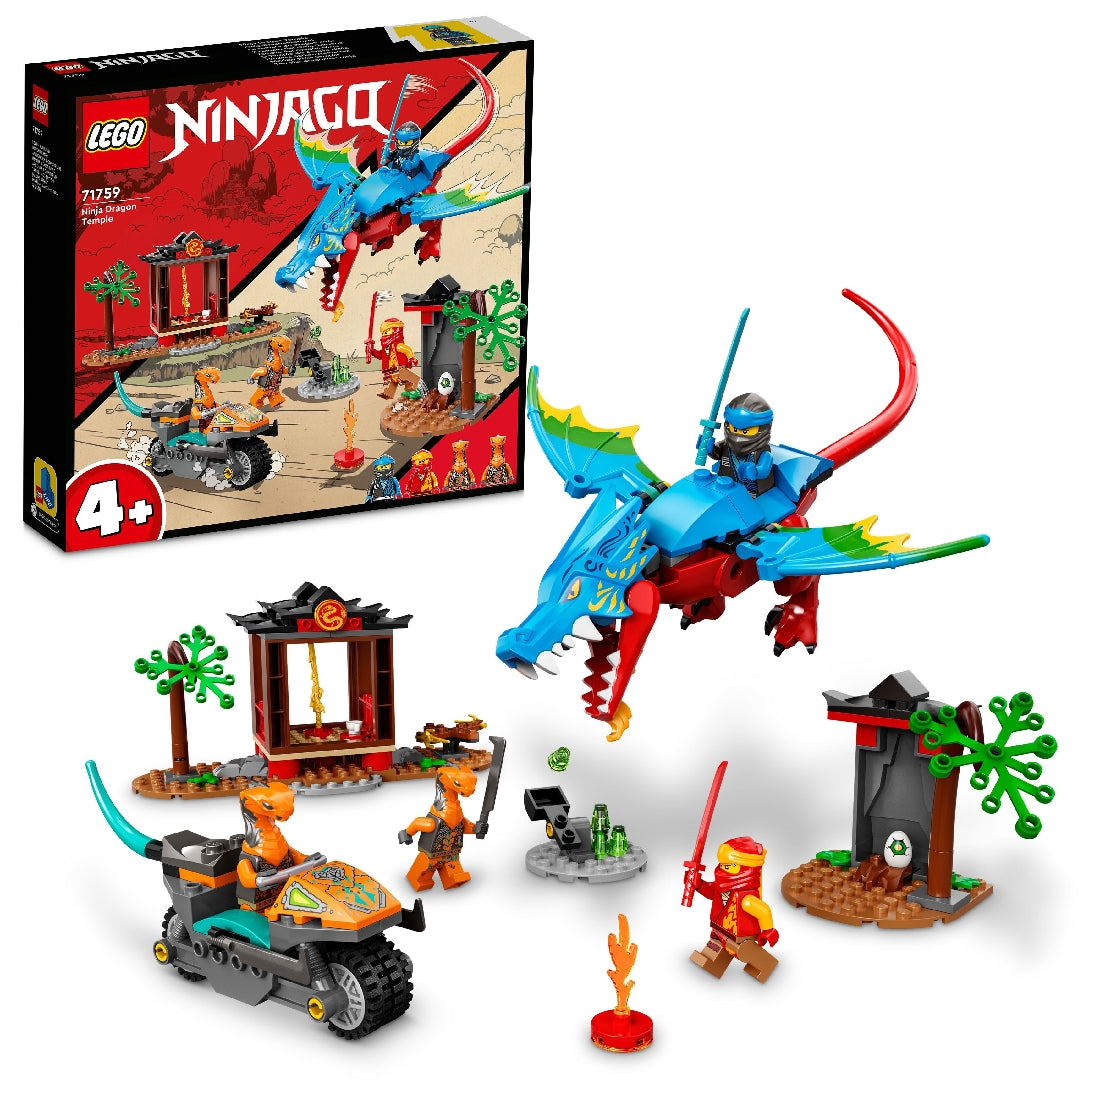 LEGO NINJAGO NINJA DRAGON TEMPLE 71759 AGE: 4+